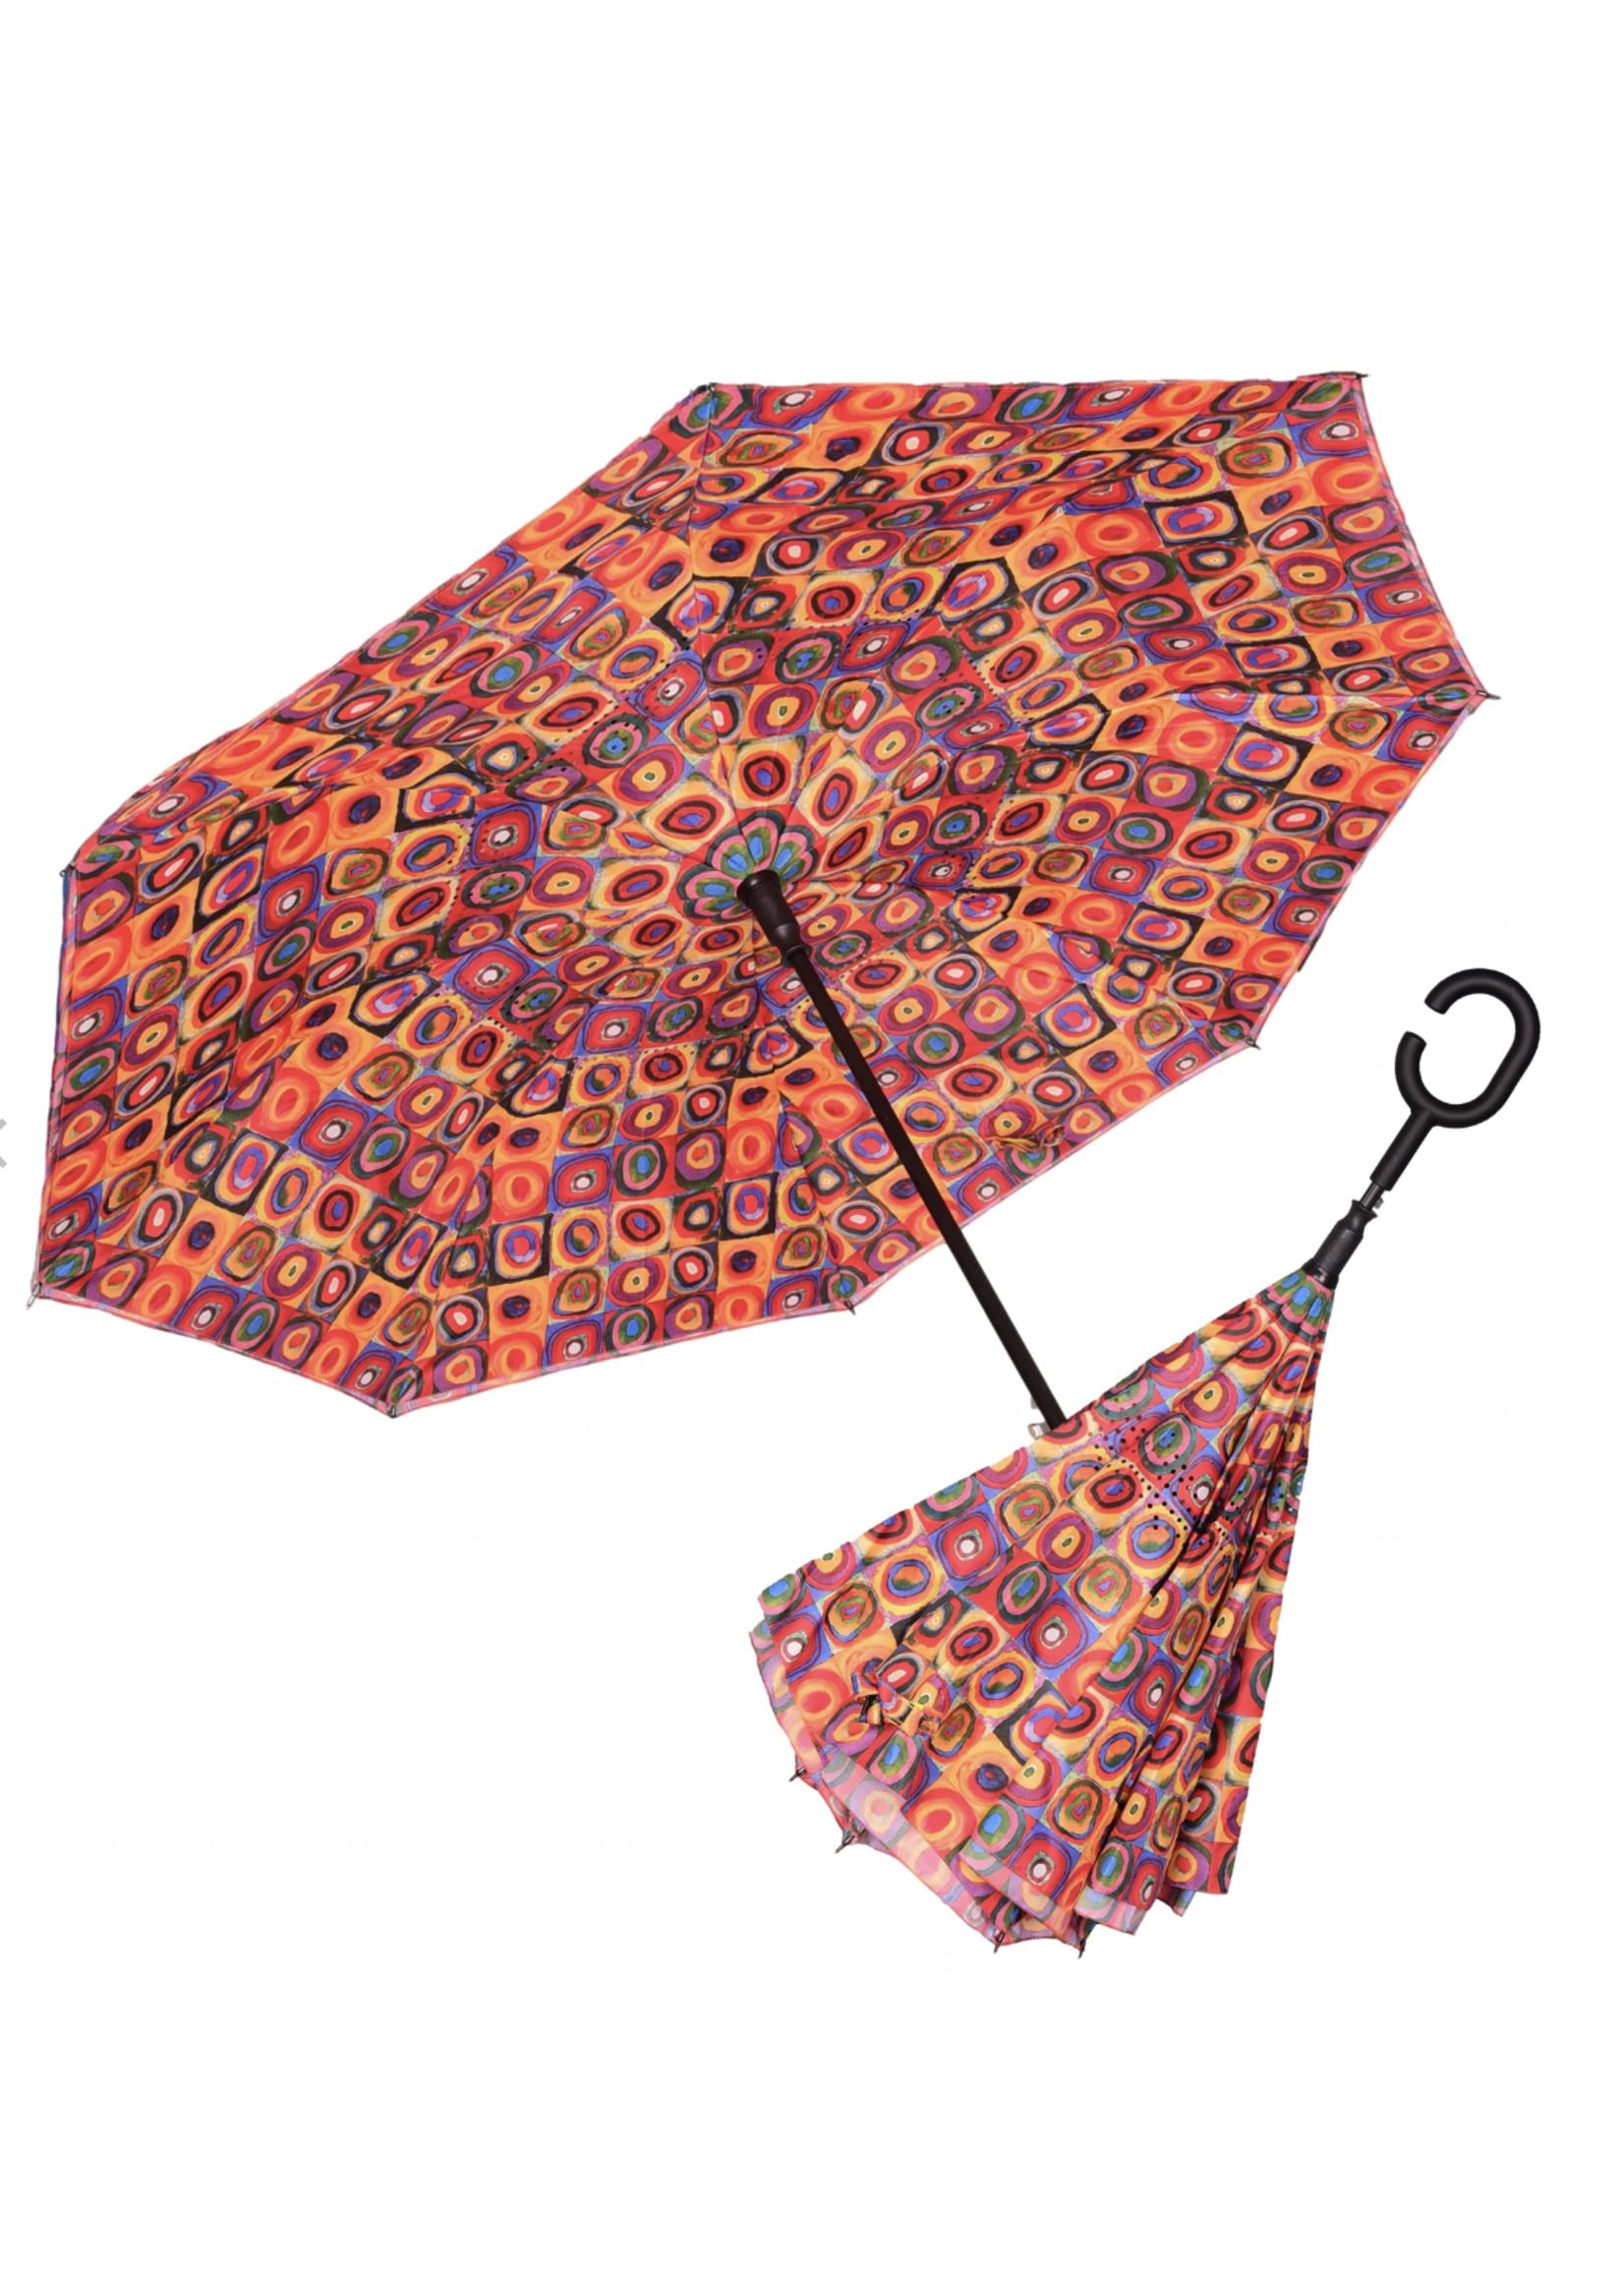 RainCaper Reverse Art Umbrella - Kadinsky Circles